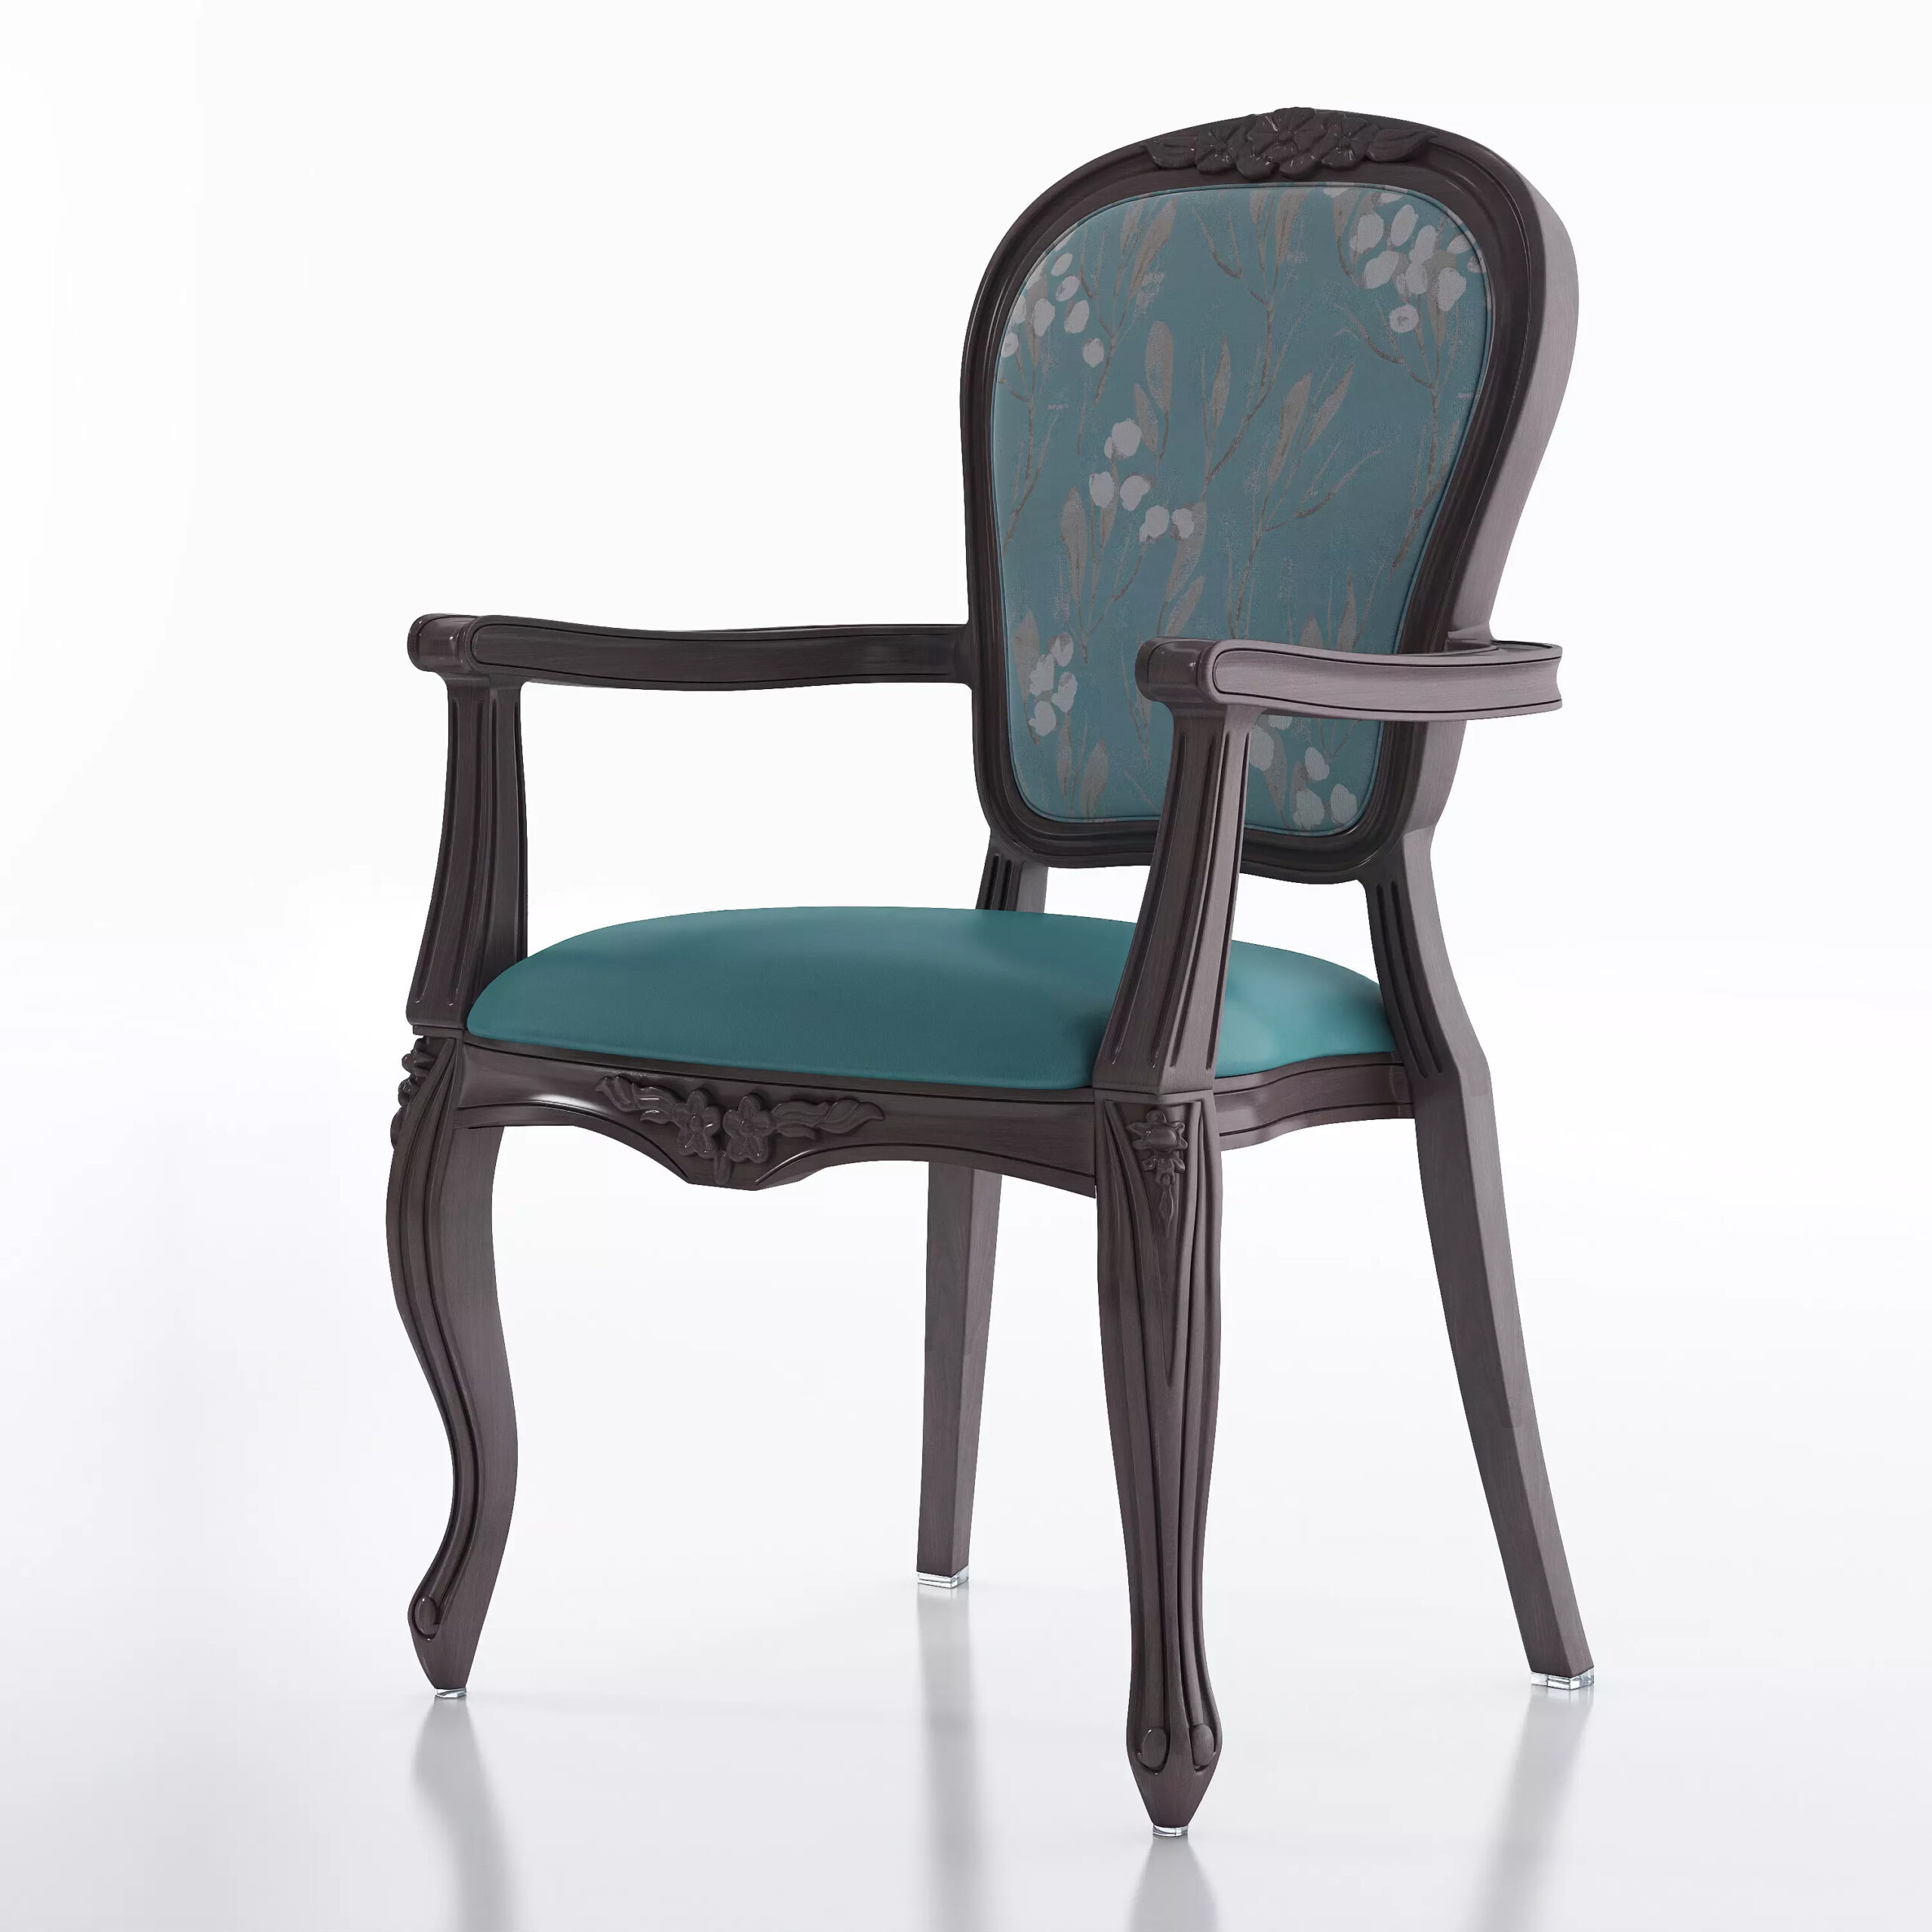 DYNACIT Arm Chair CFS5544